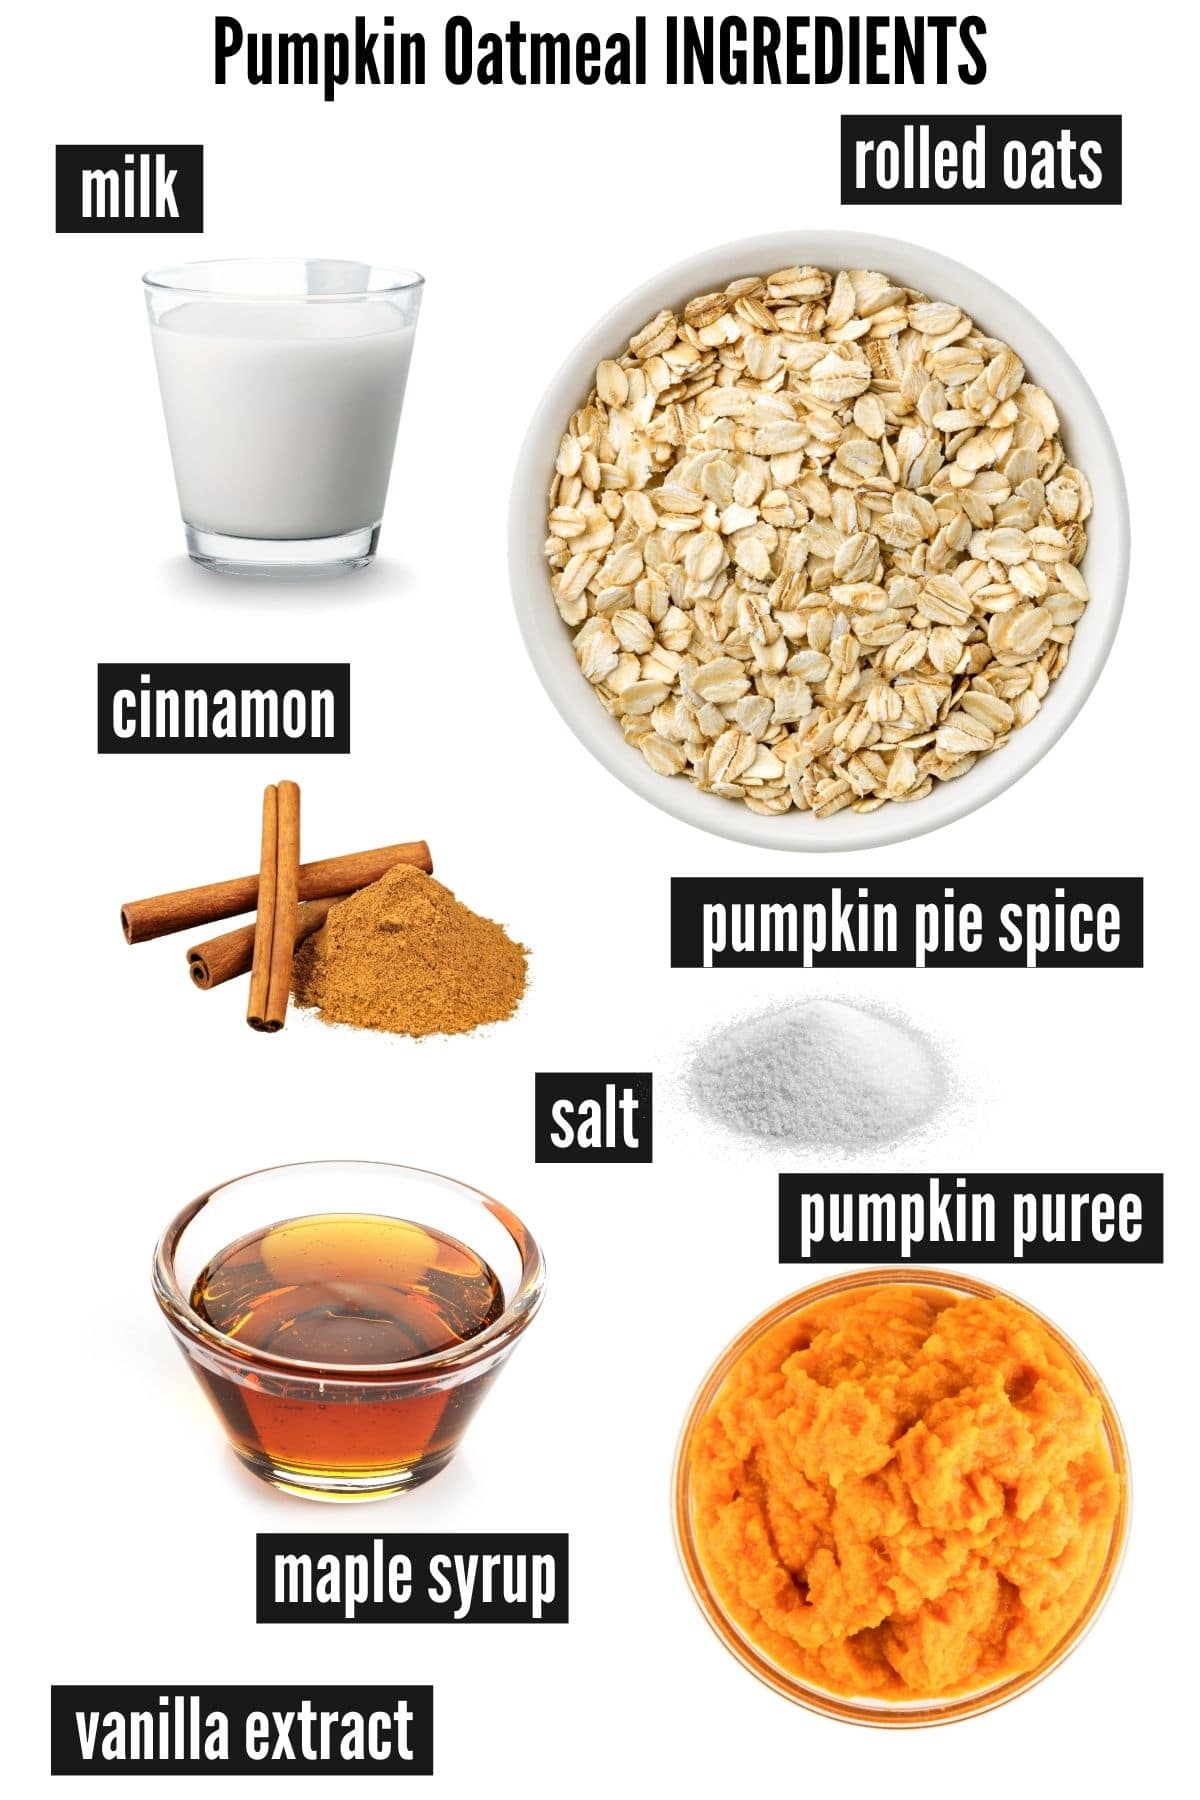 pumpkin oatmeal ingredients